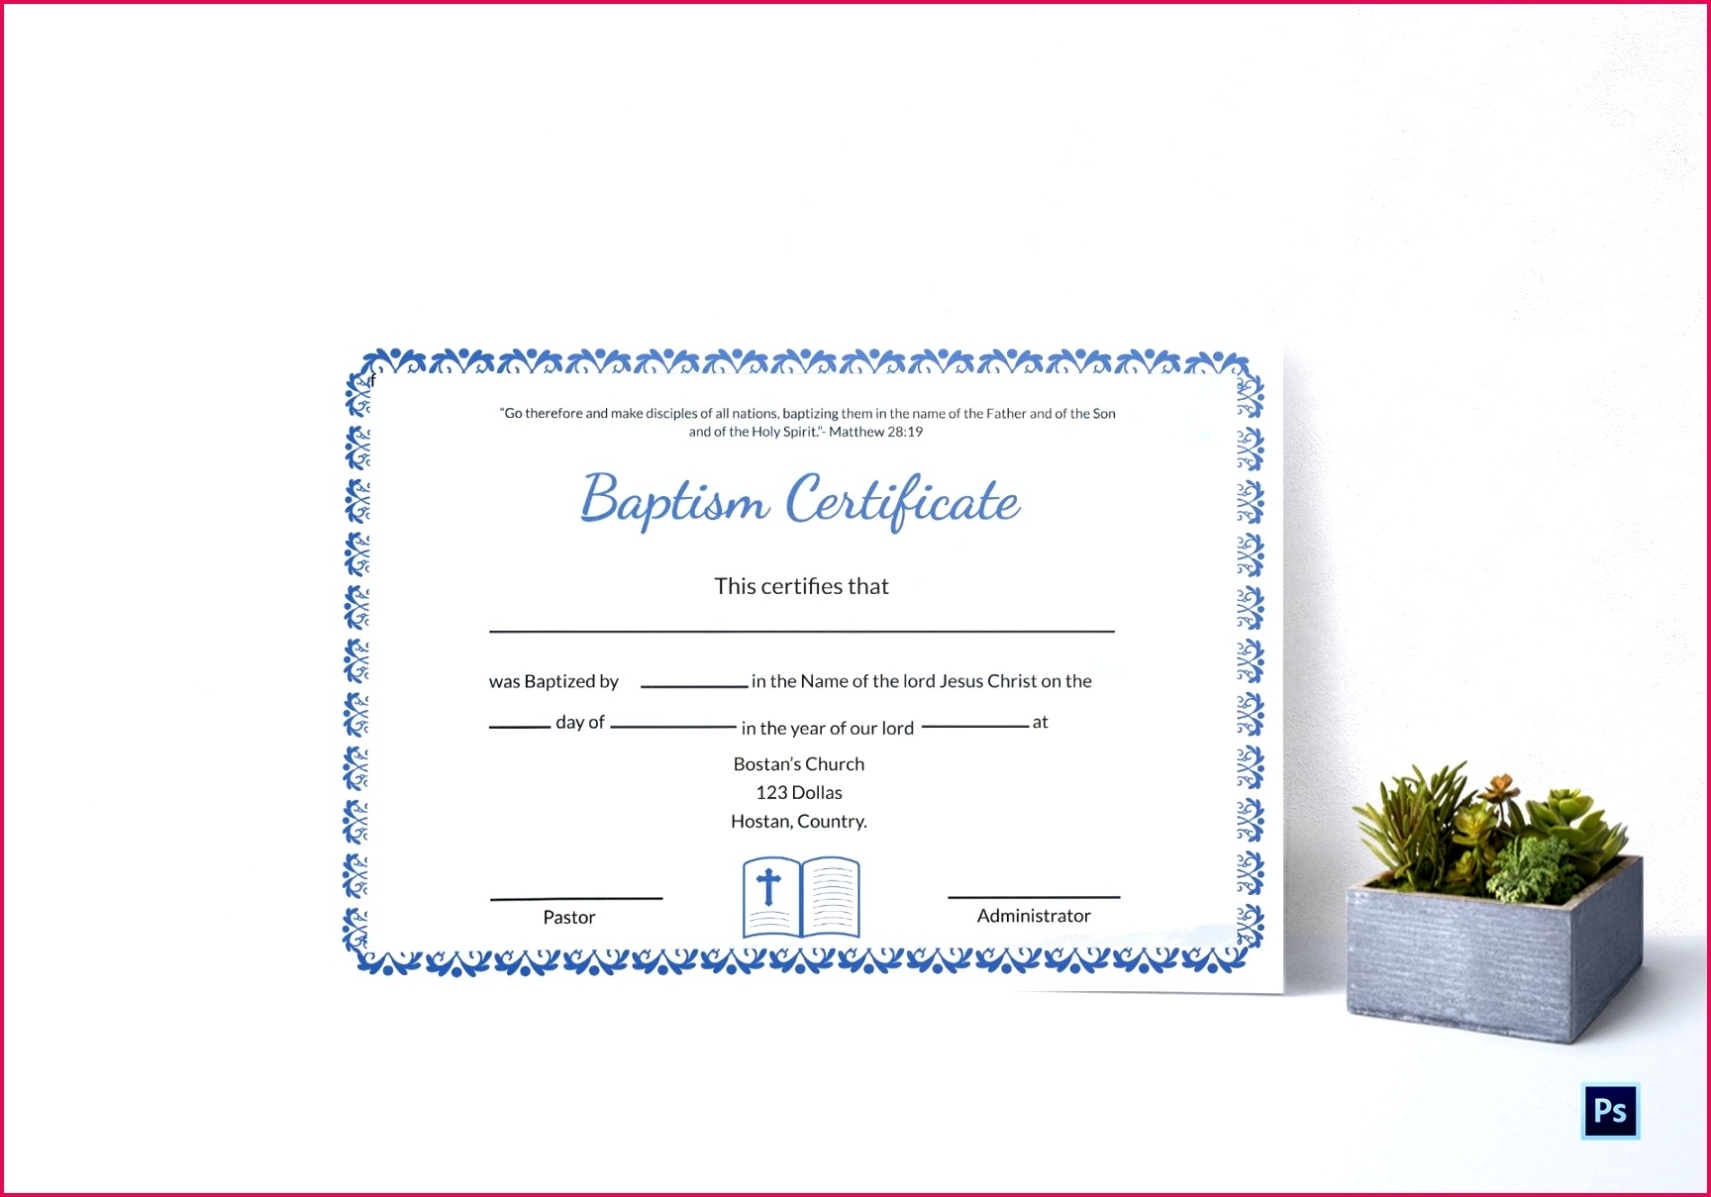 6 Baptism Certificate Templates Word 64746 | Fabtemplatez Regarding Baptism Certificate Template Word